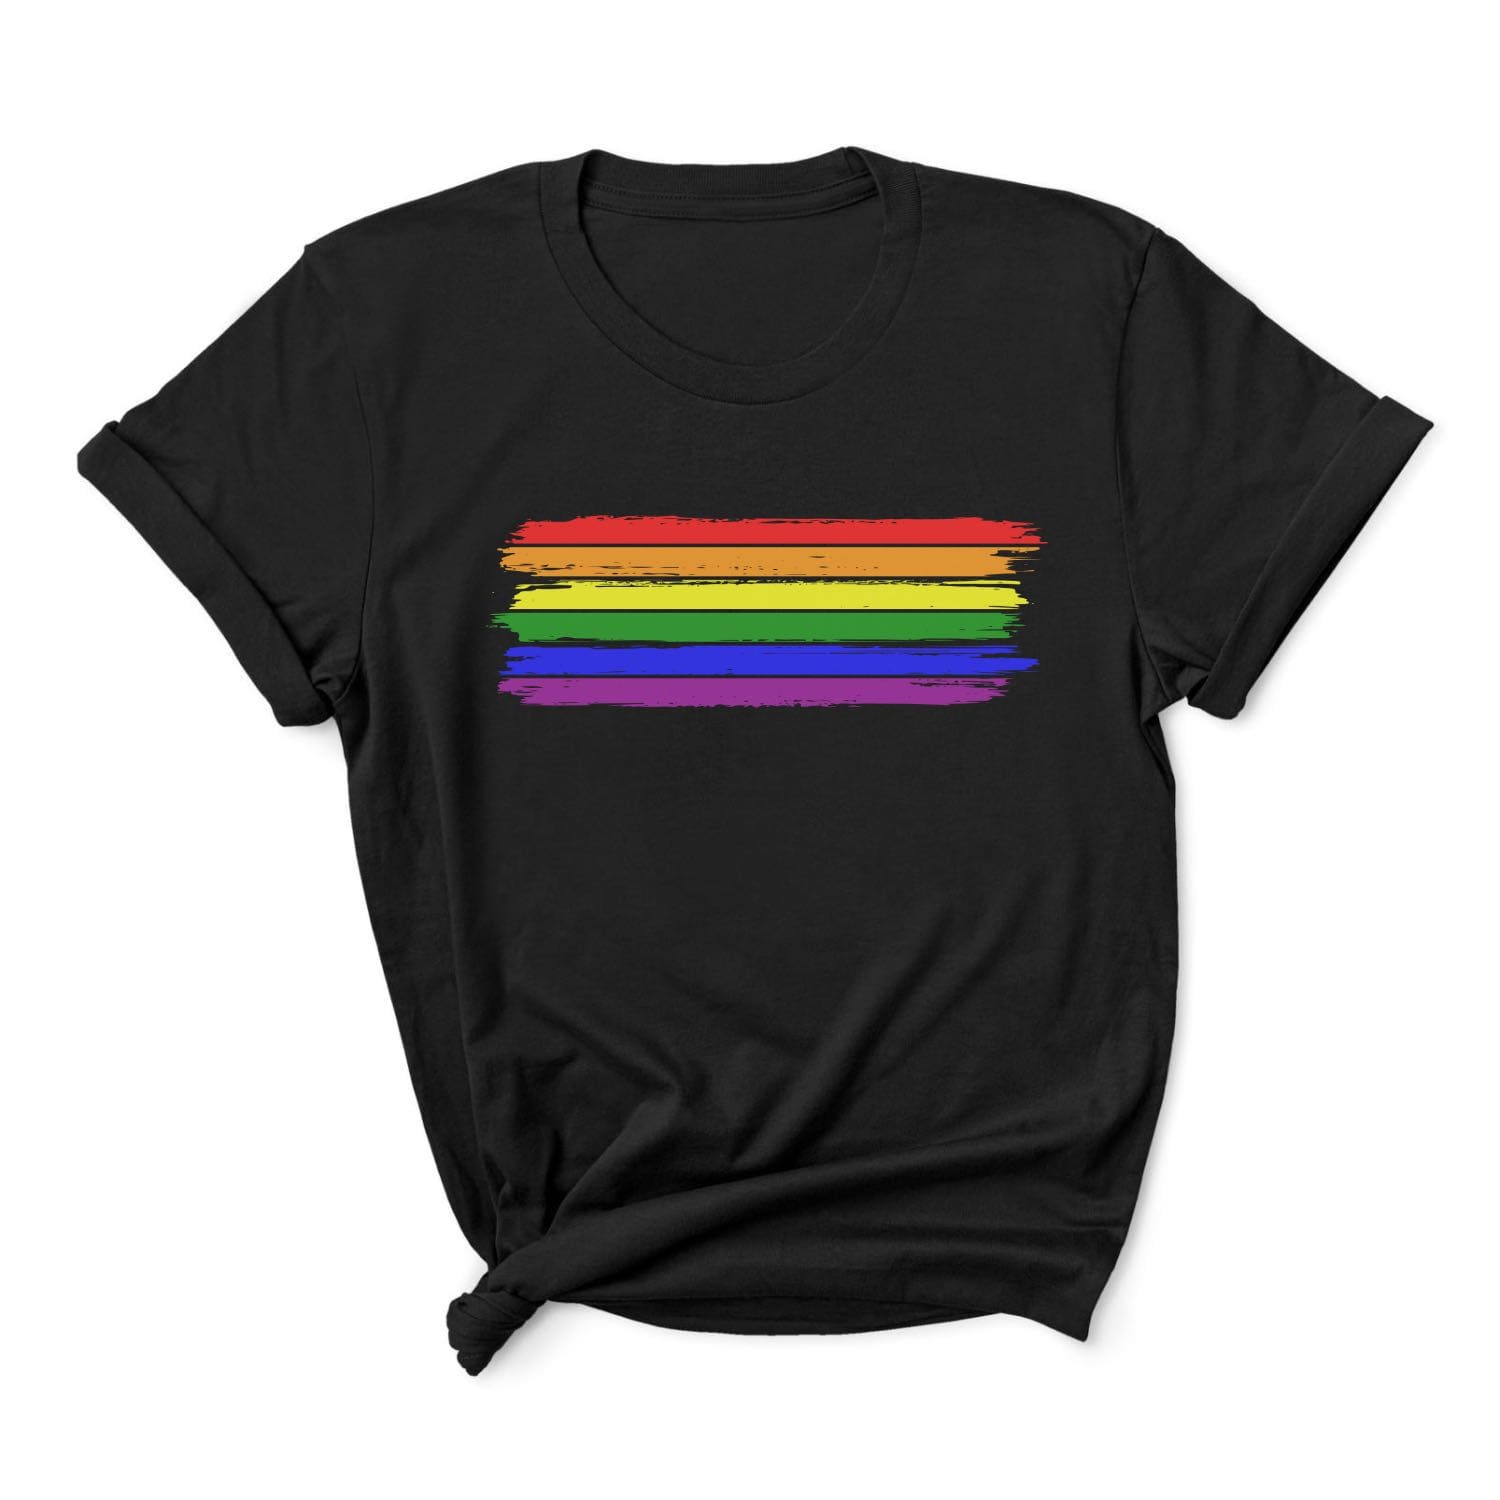 LGBT shirt, grunge rainbow flag tee, main